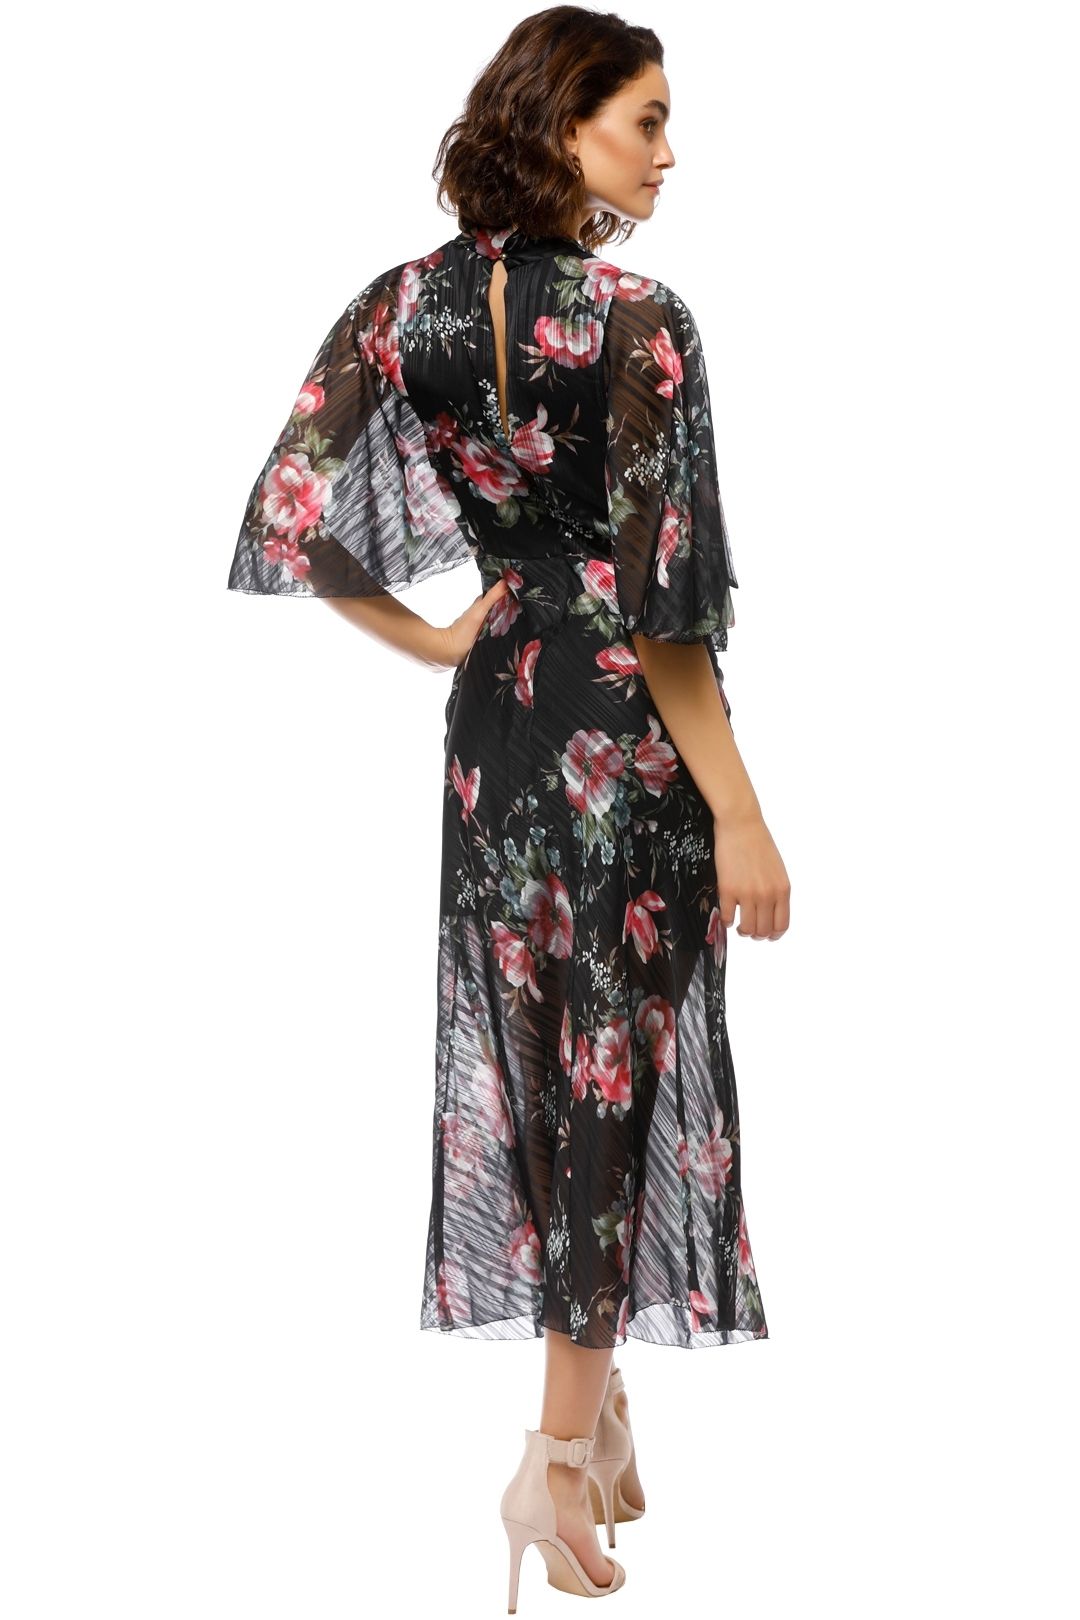 Talulah - Belonging Midi Dress - Black Floral - Back